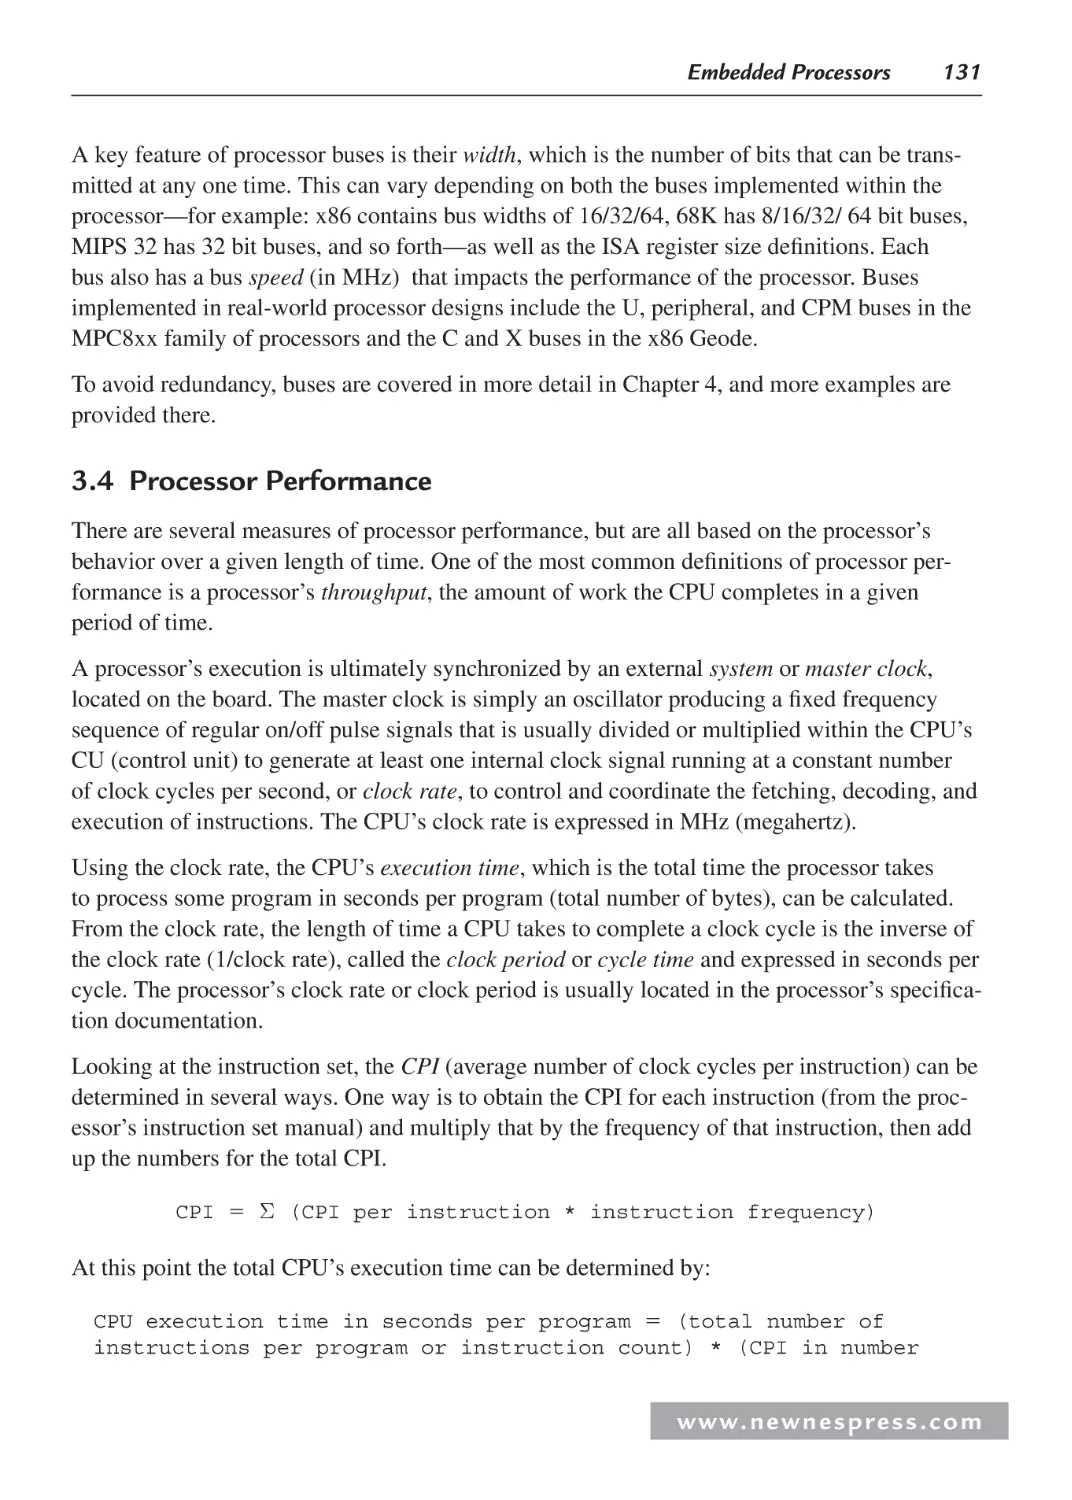 3.4 Processor Performance